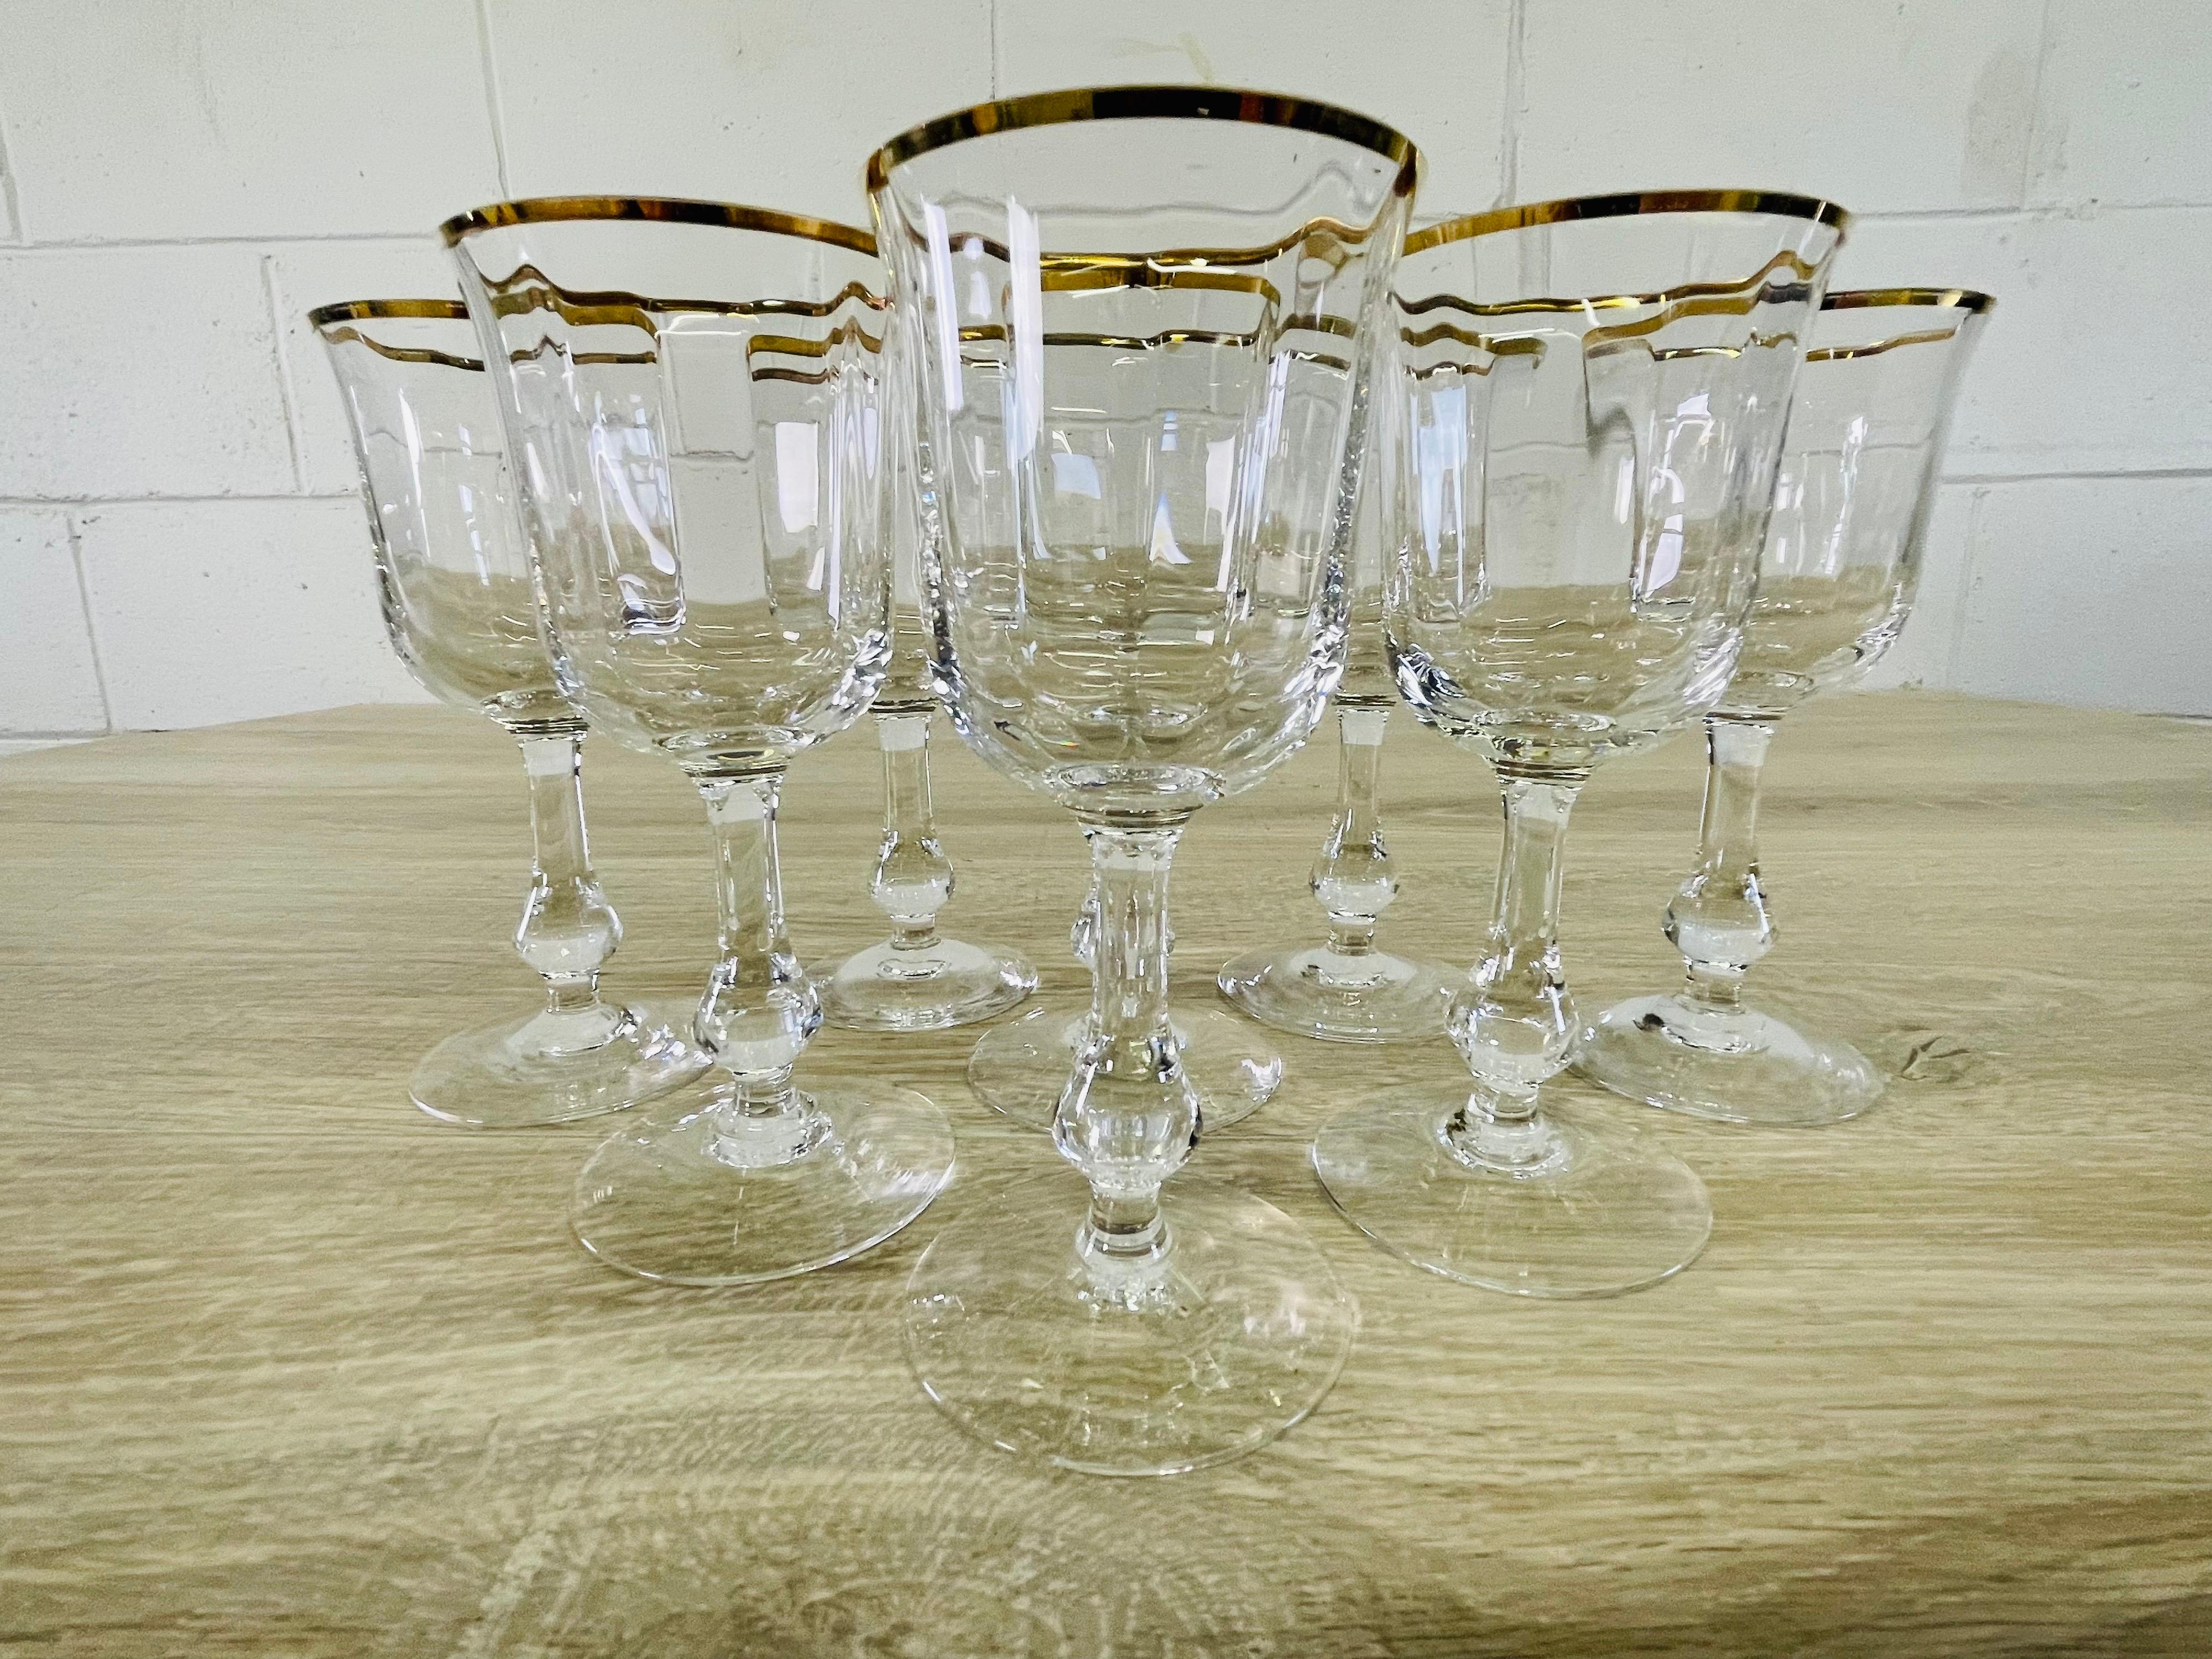 Vintage 1970s set of 8 gold rim glass wine stems. No marks.